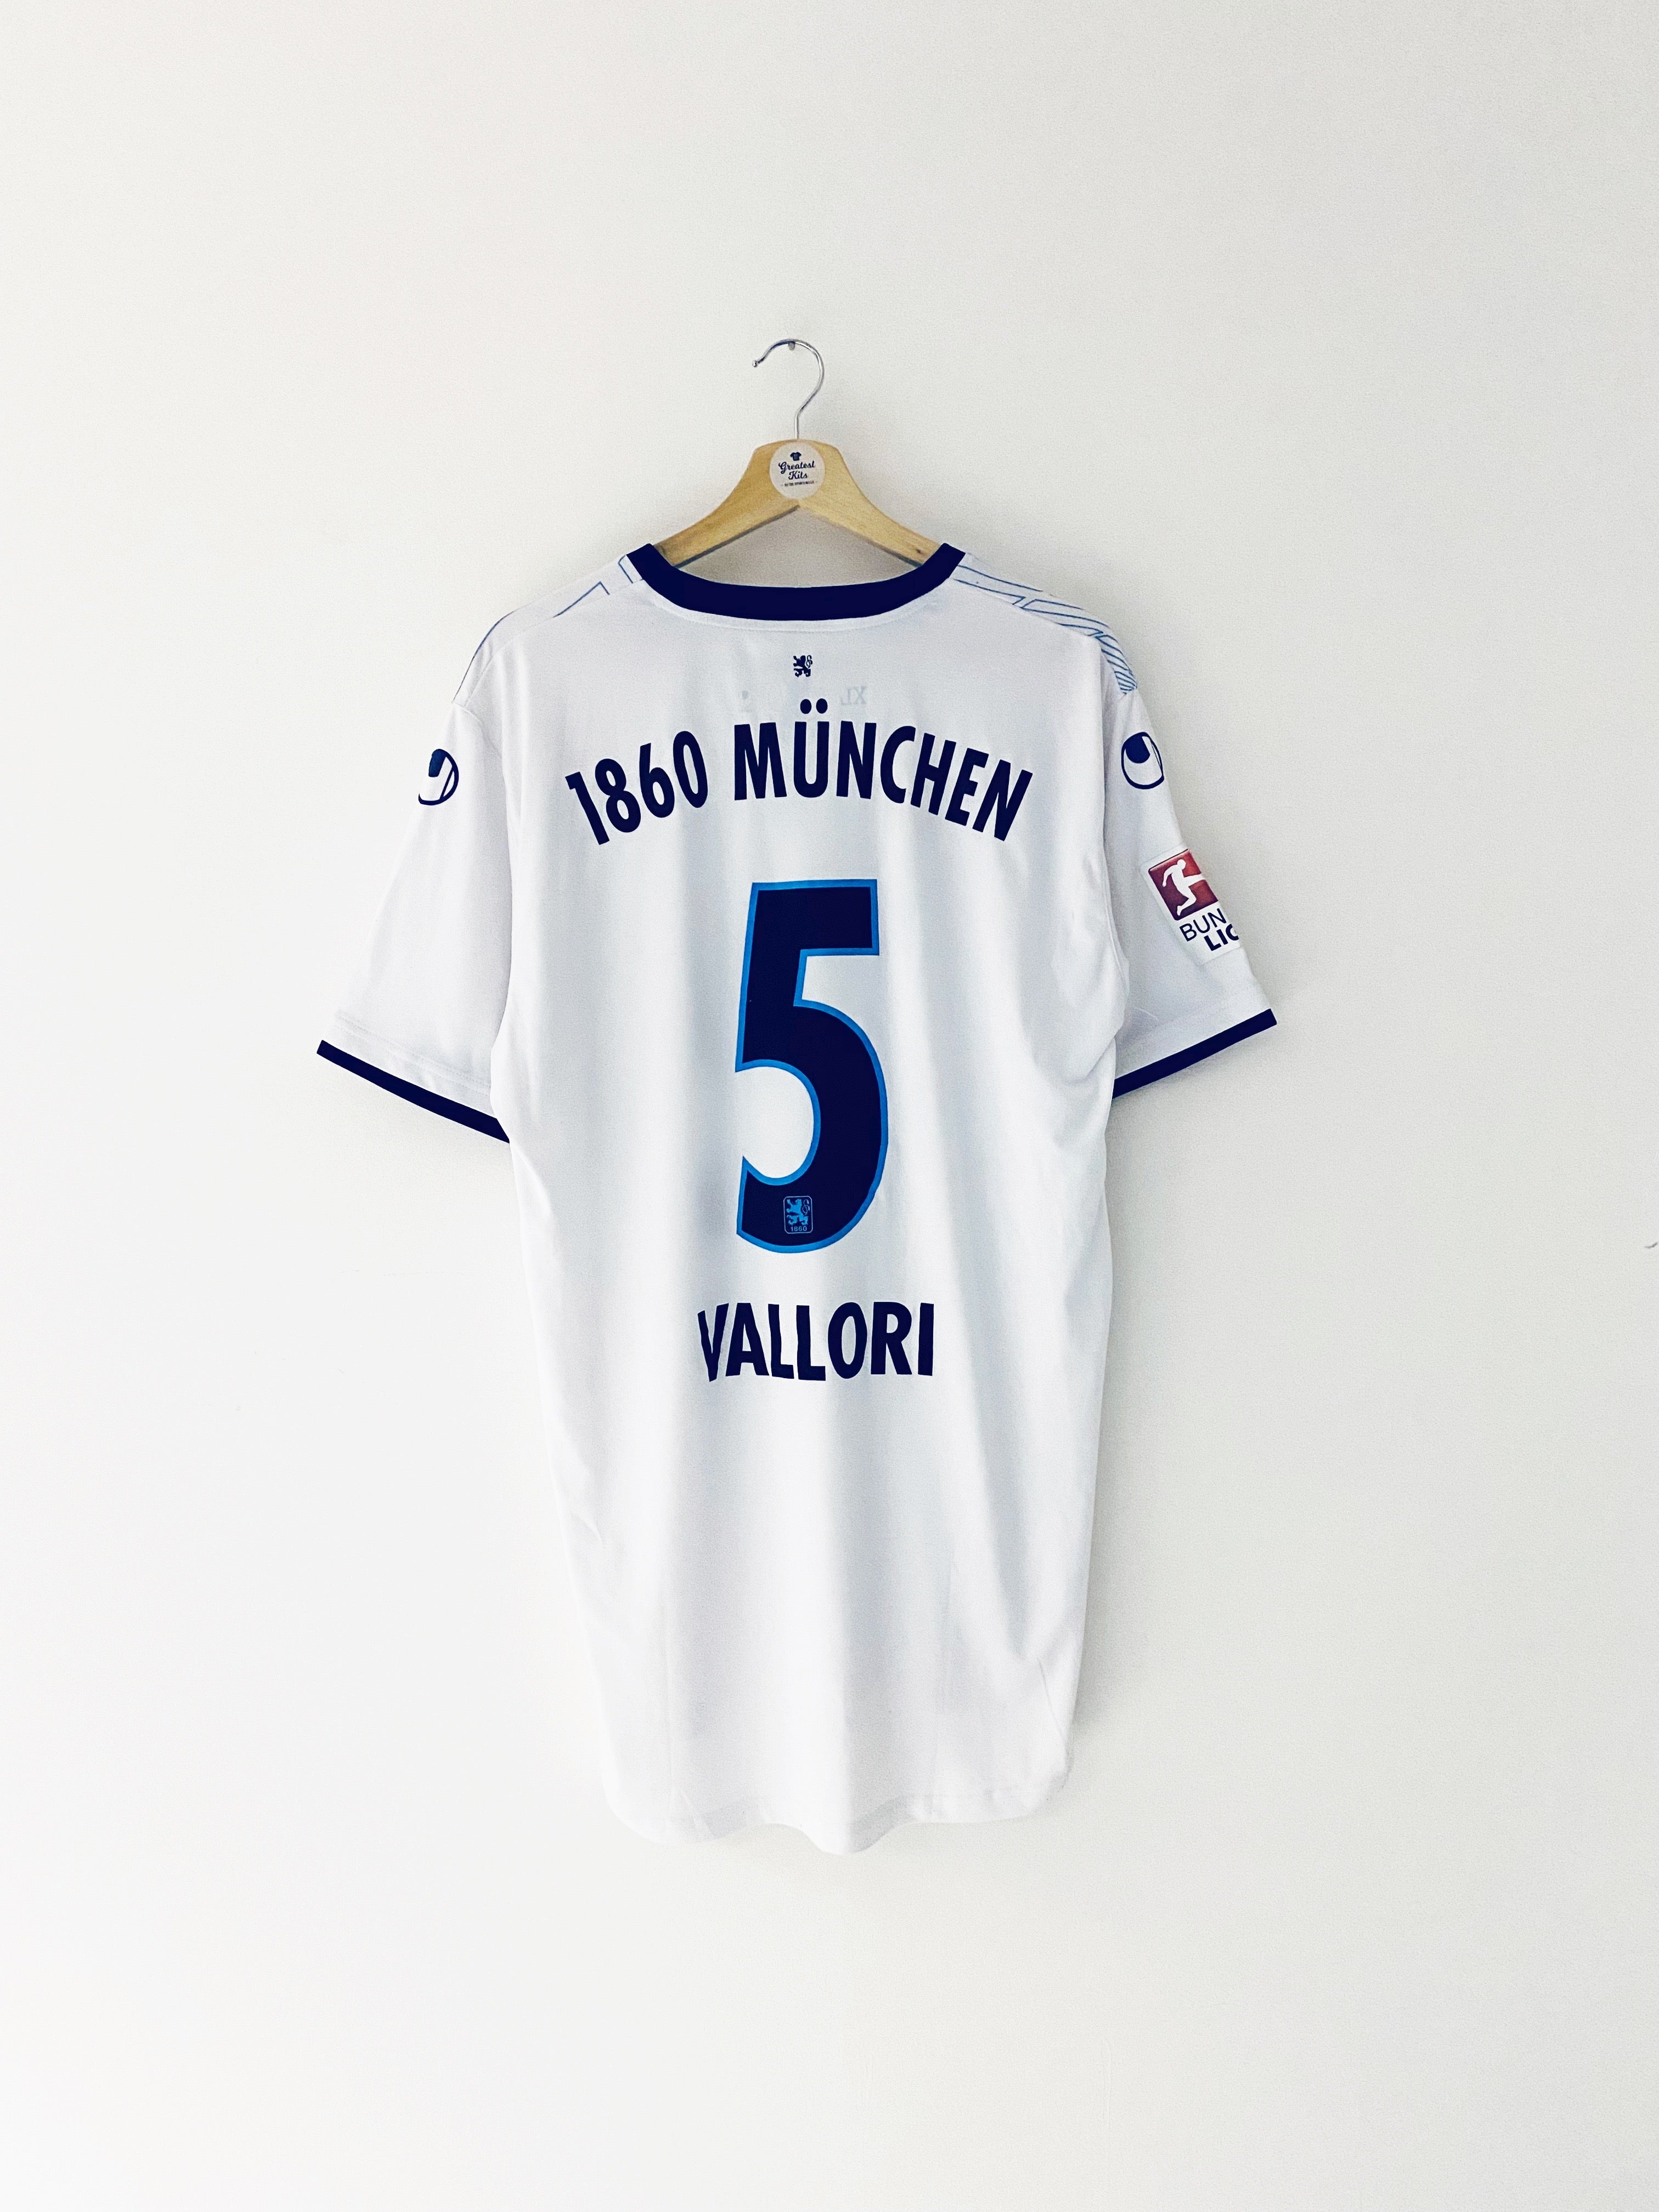 2014/15 1860 Munich Away Shirt Vallori #5 (XL) 8.5/10